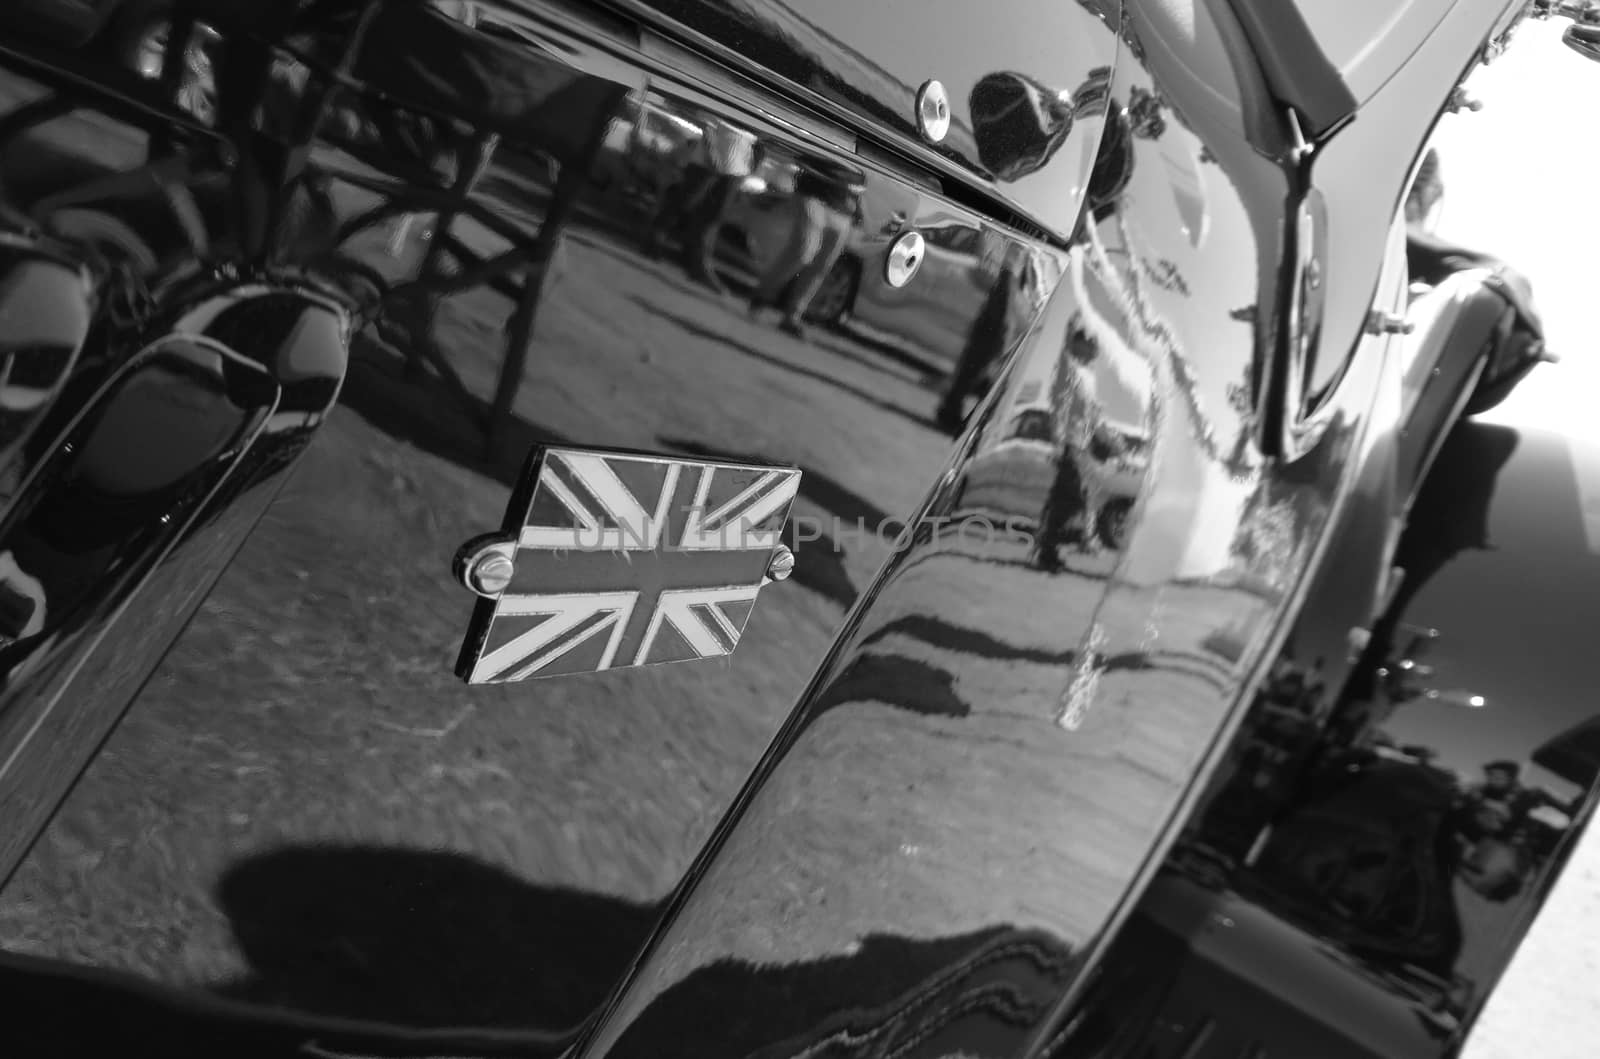 United Kingdom National Union Jack logo on classical car in blac by eyeofpaul